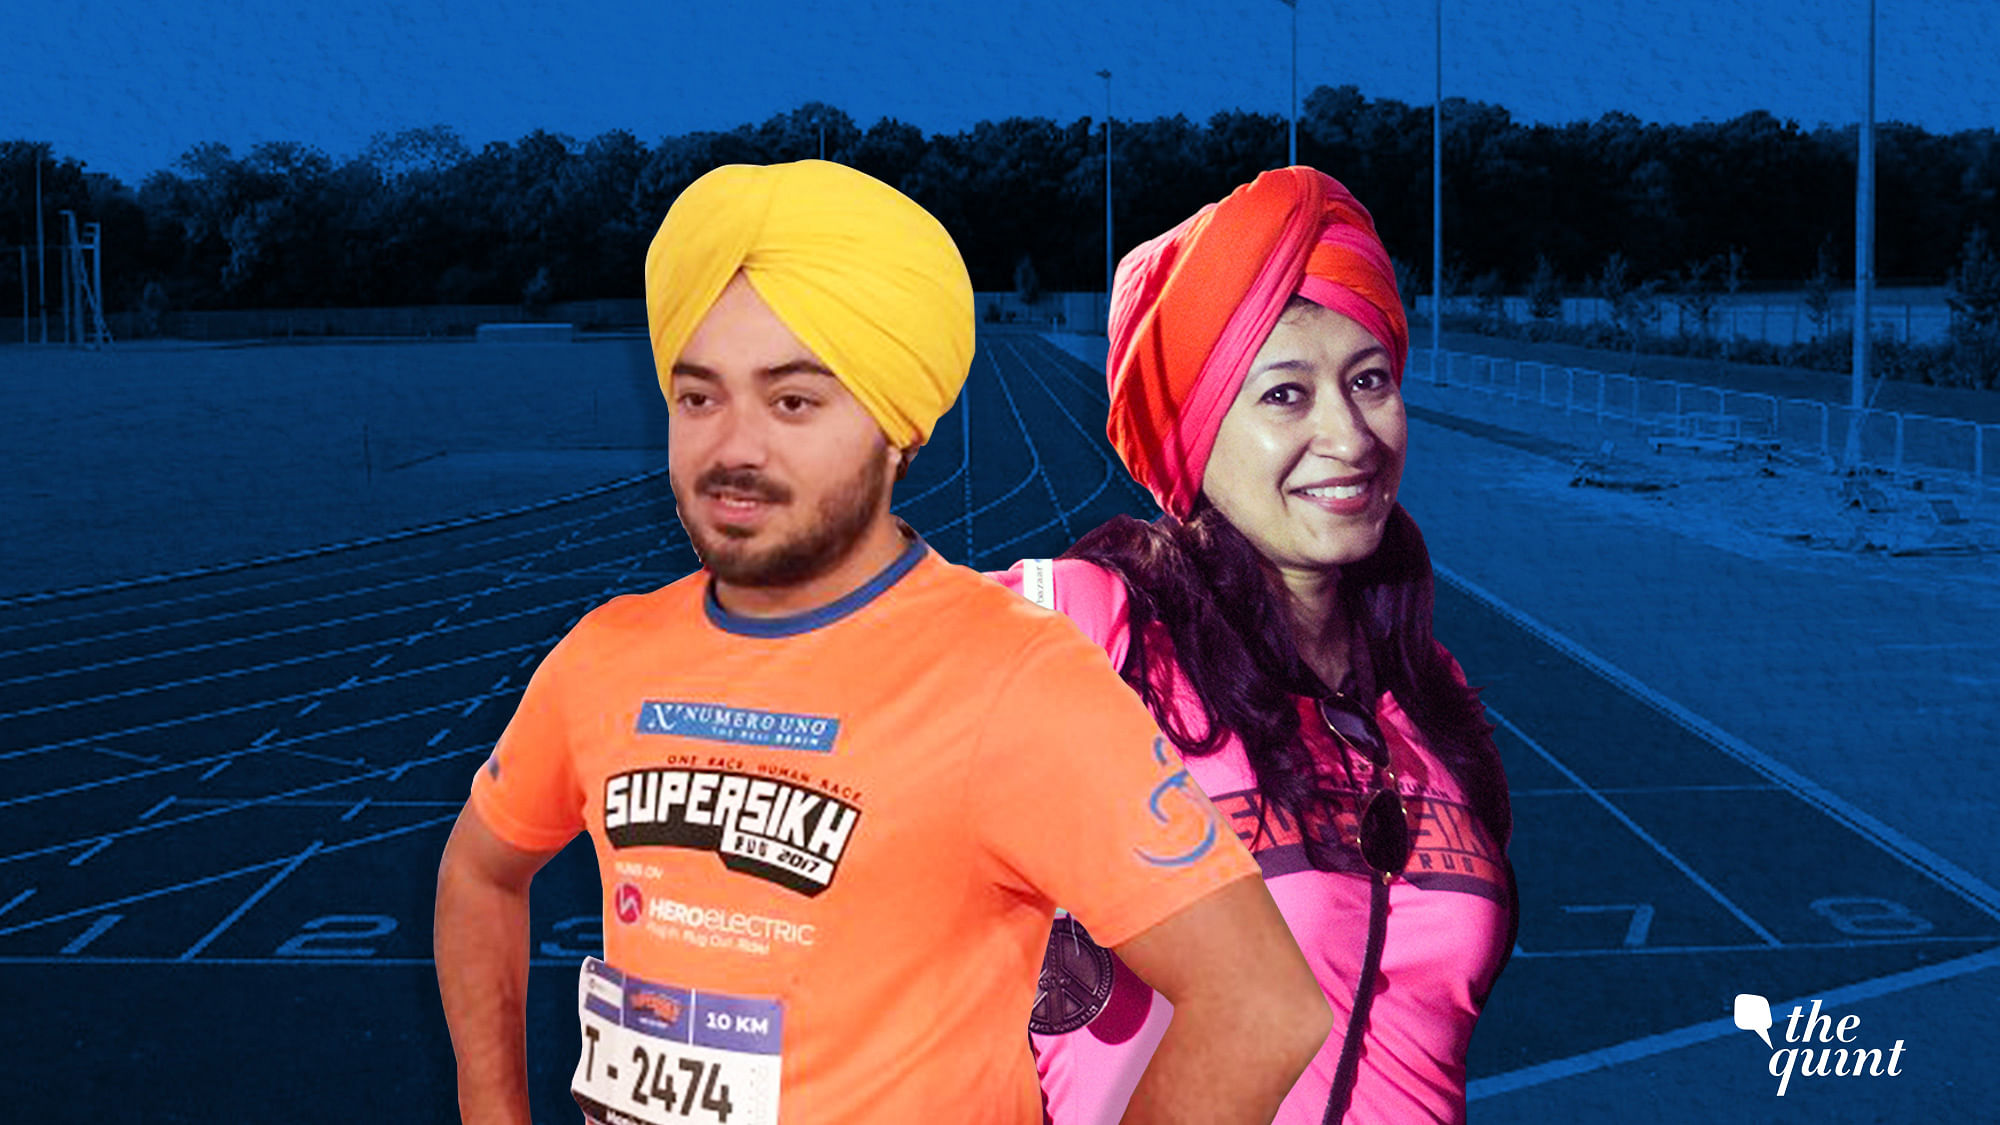 Super Sikh Run Half Marathon 2017&nbsp;